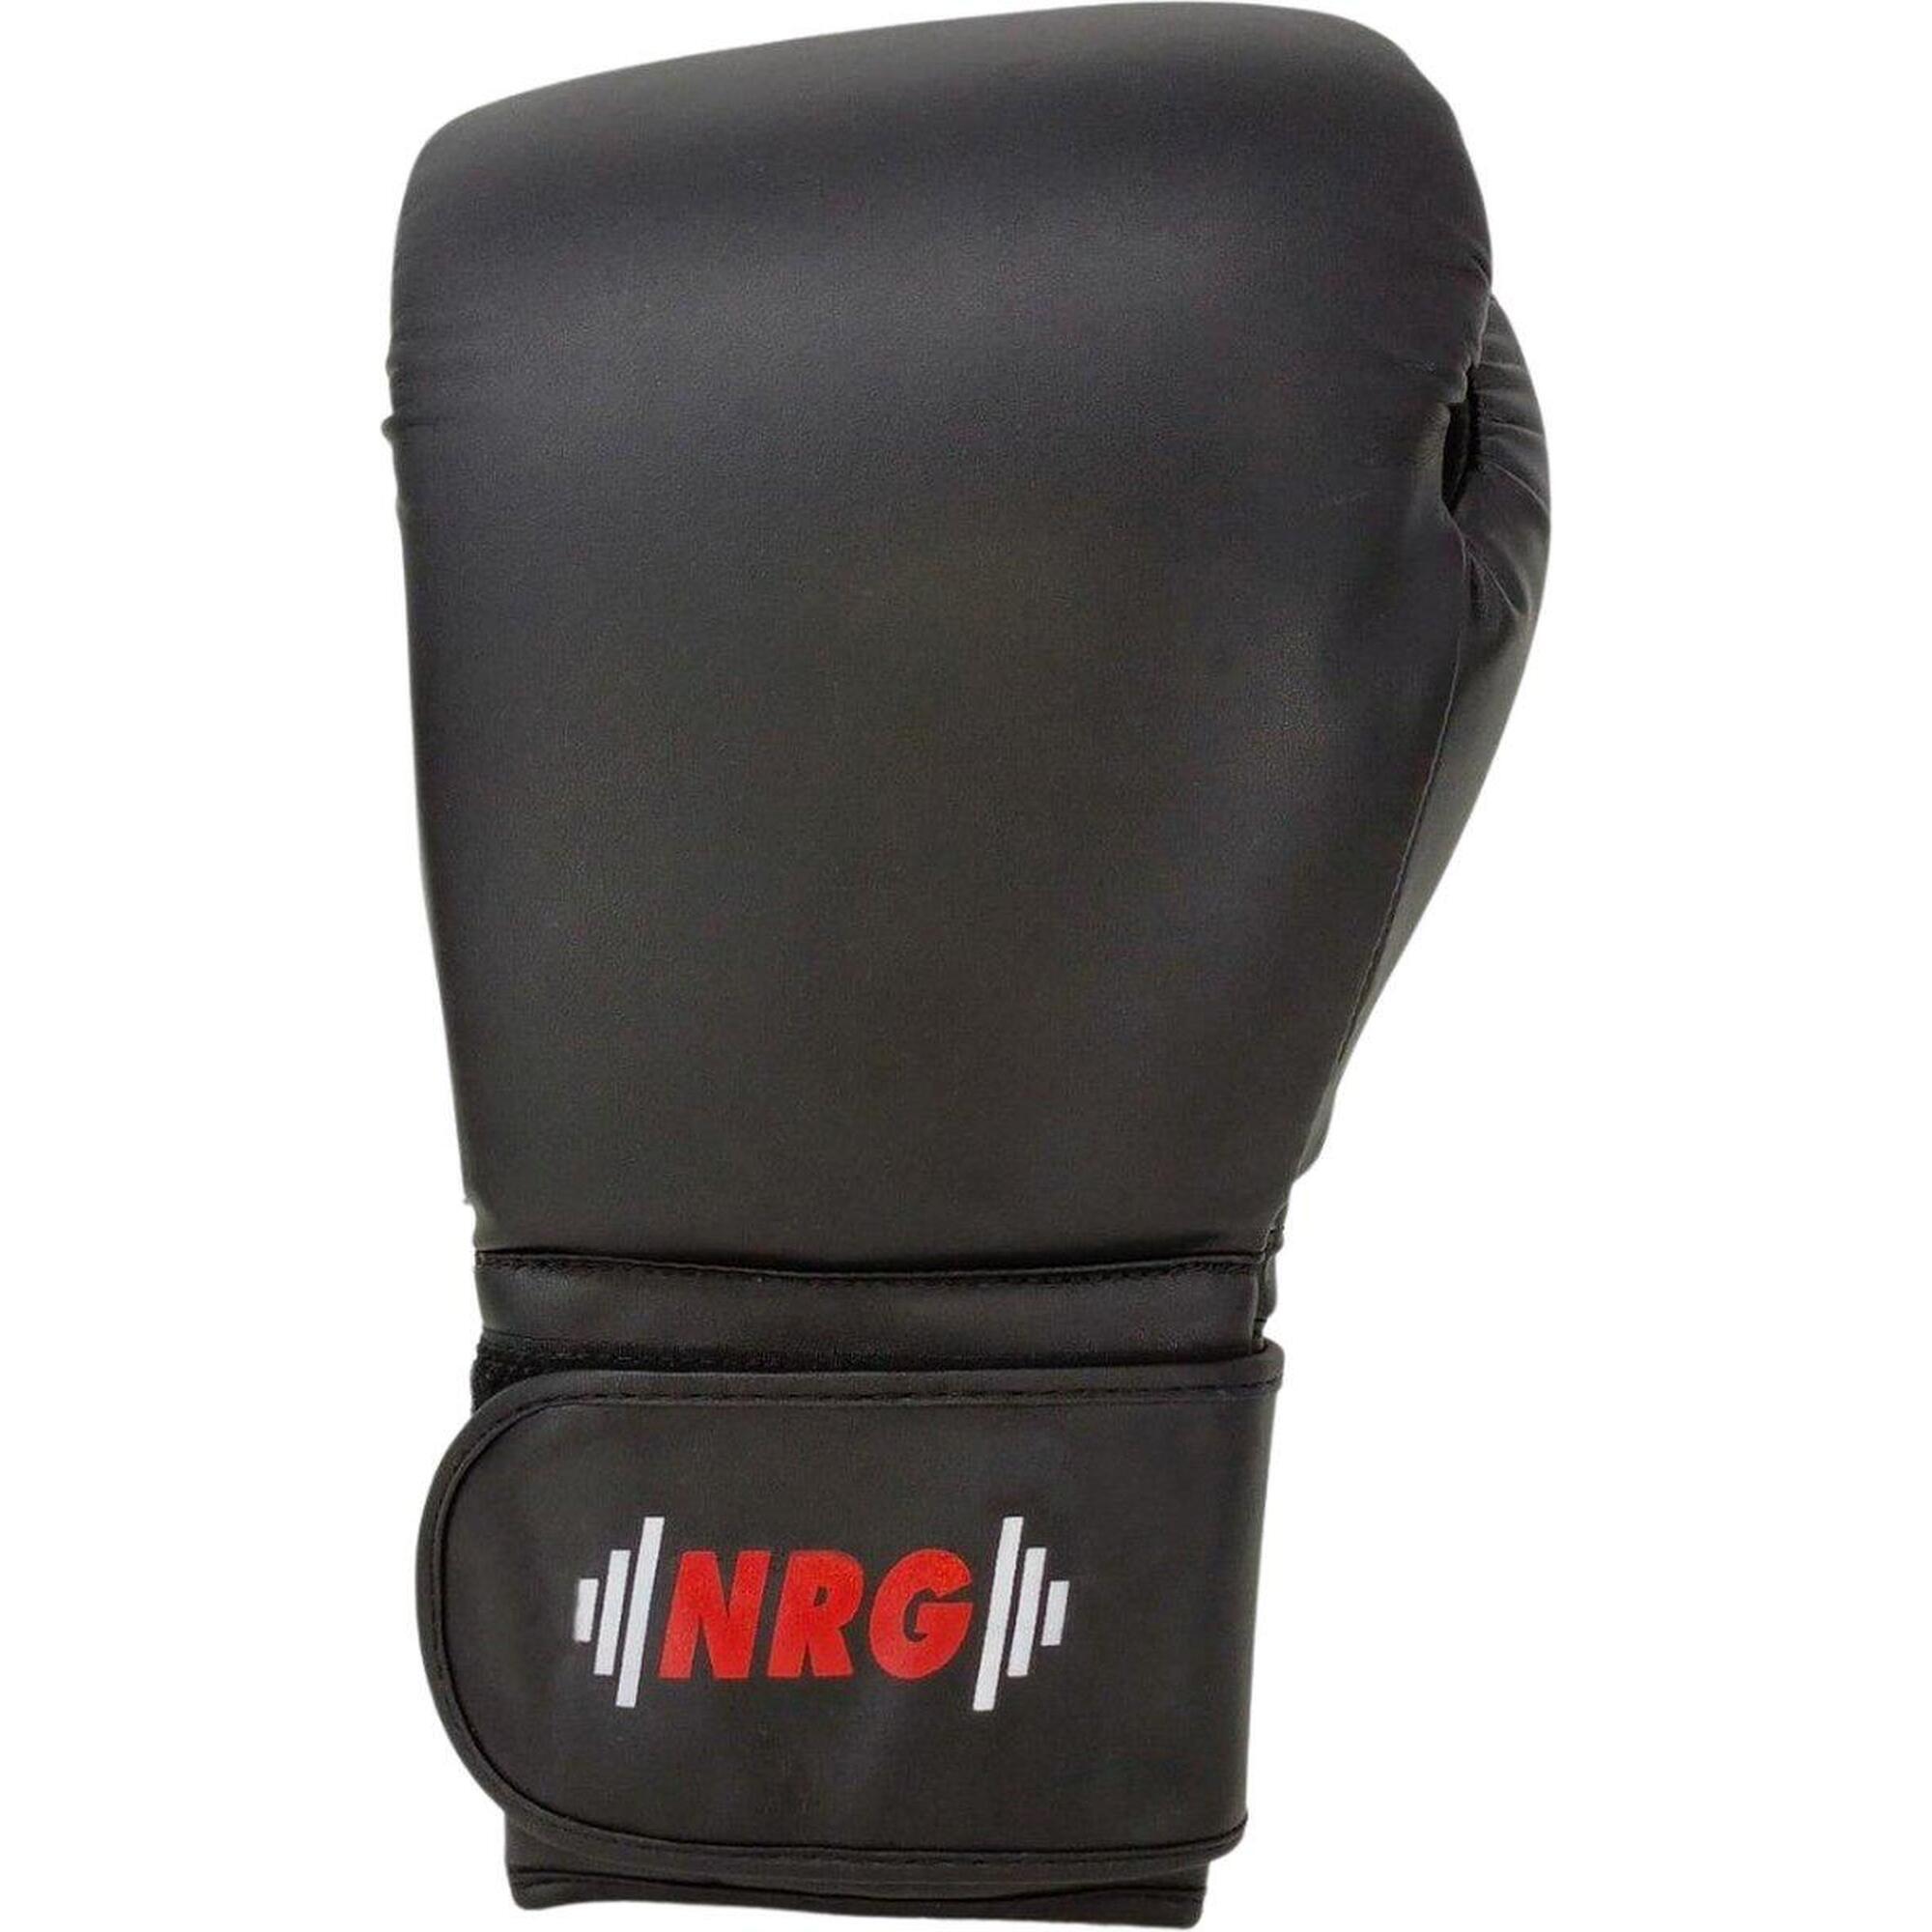 F4 Bokshandschoenen - Boxing Gloves - Zwart - 14OZ